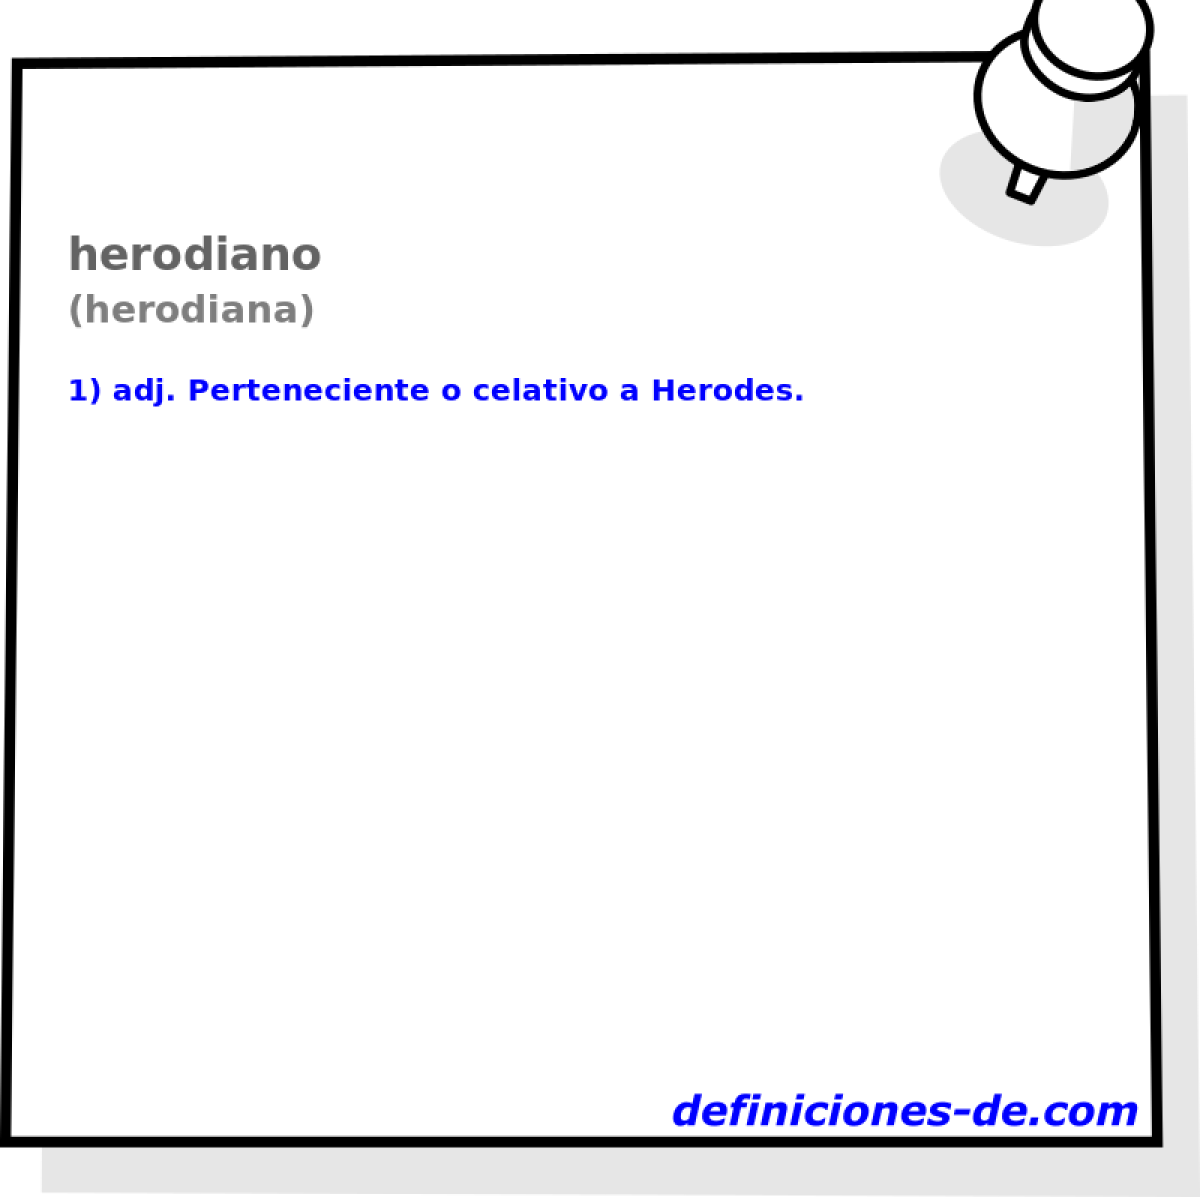 herodiano (herodiana)